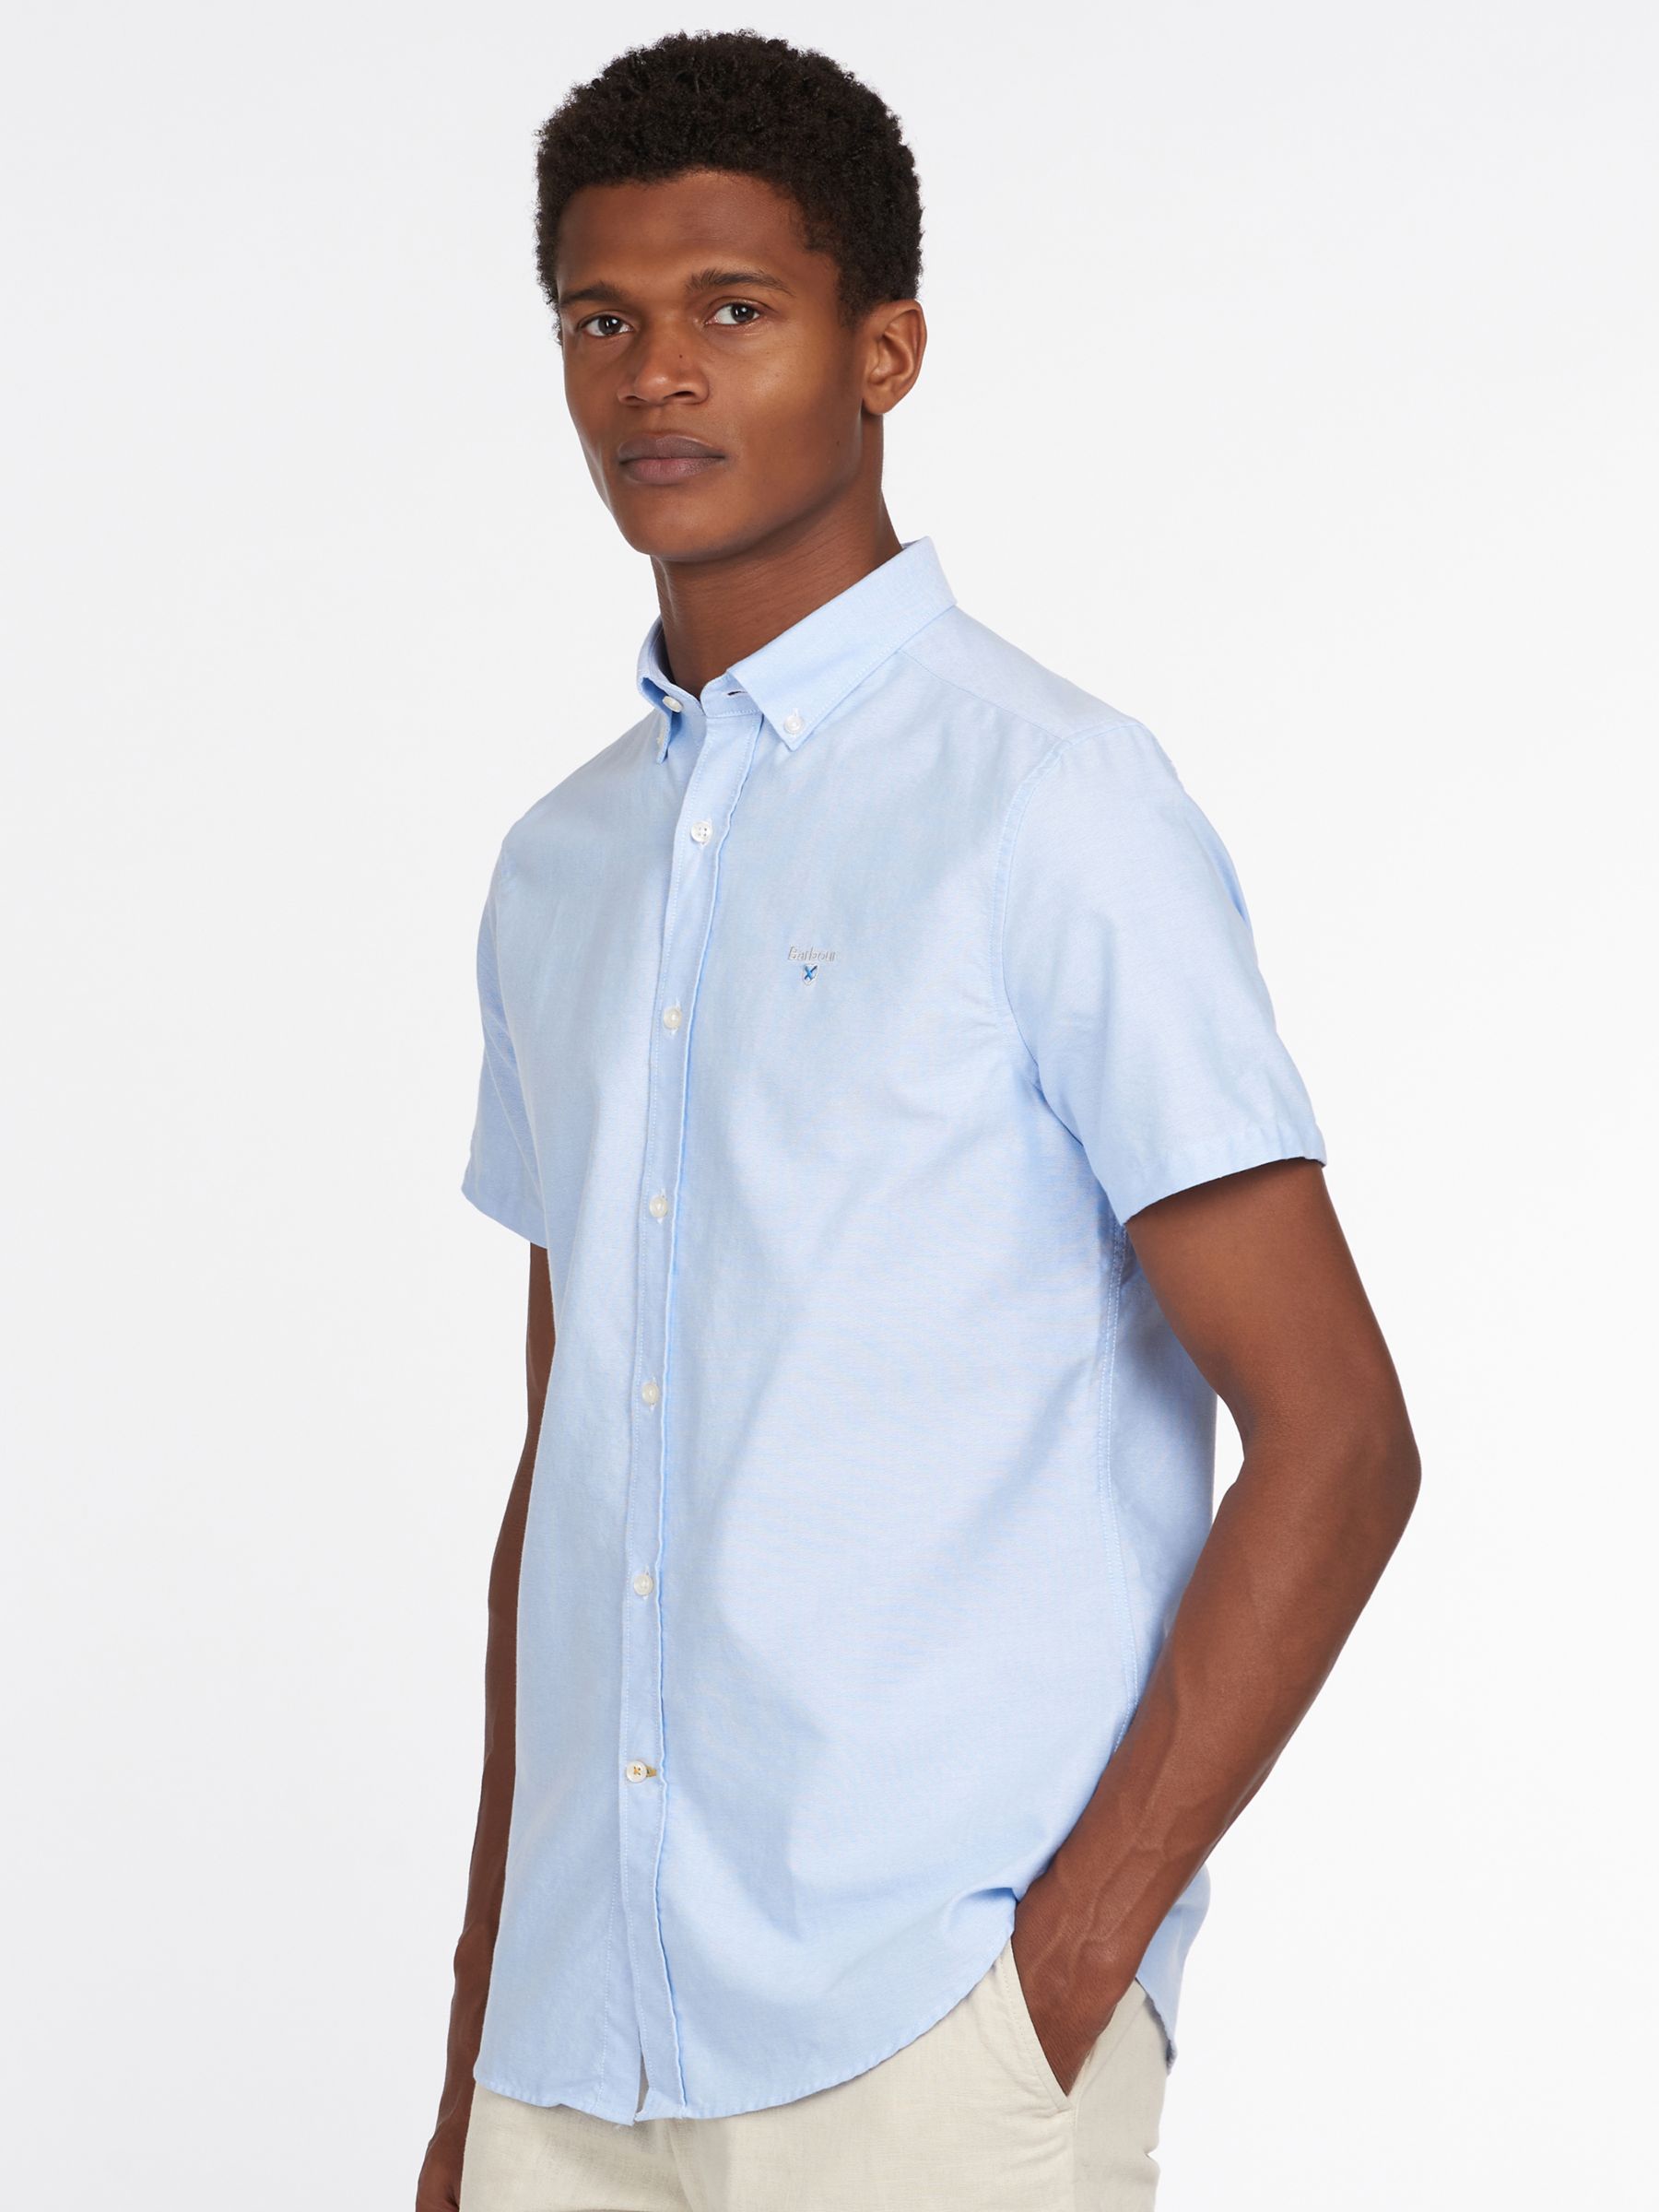 Mens Blue Short Sleeve Shirts | John & Partners